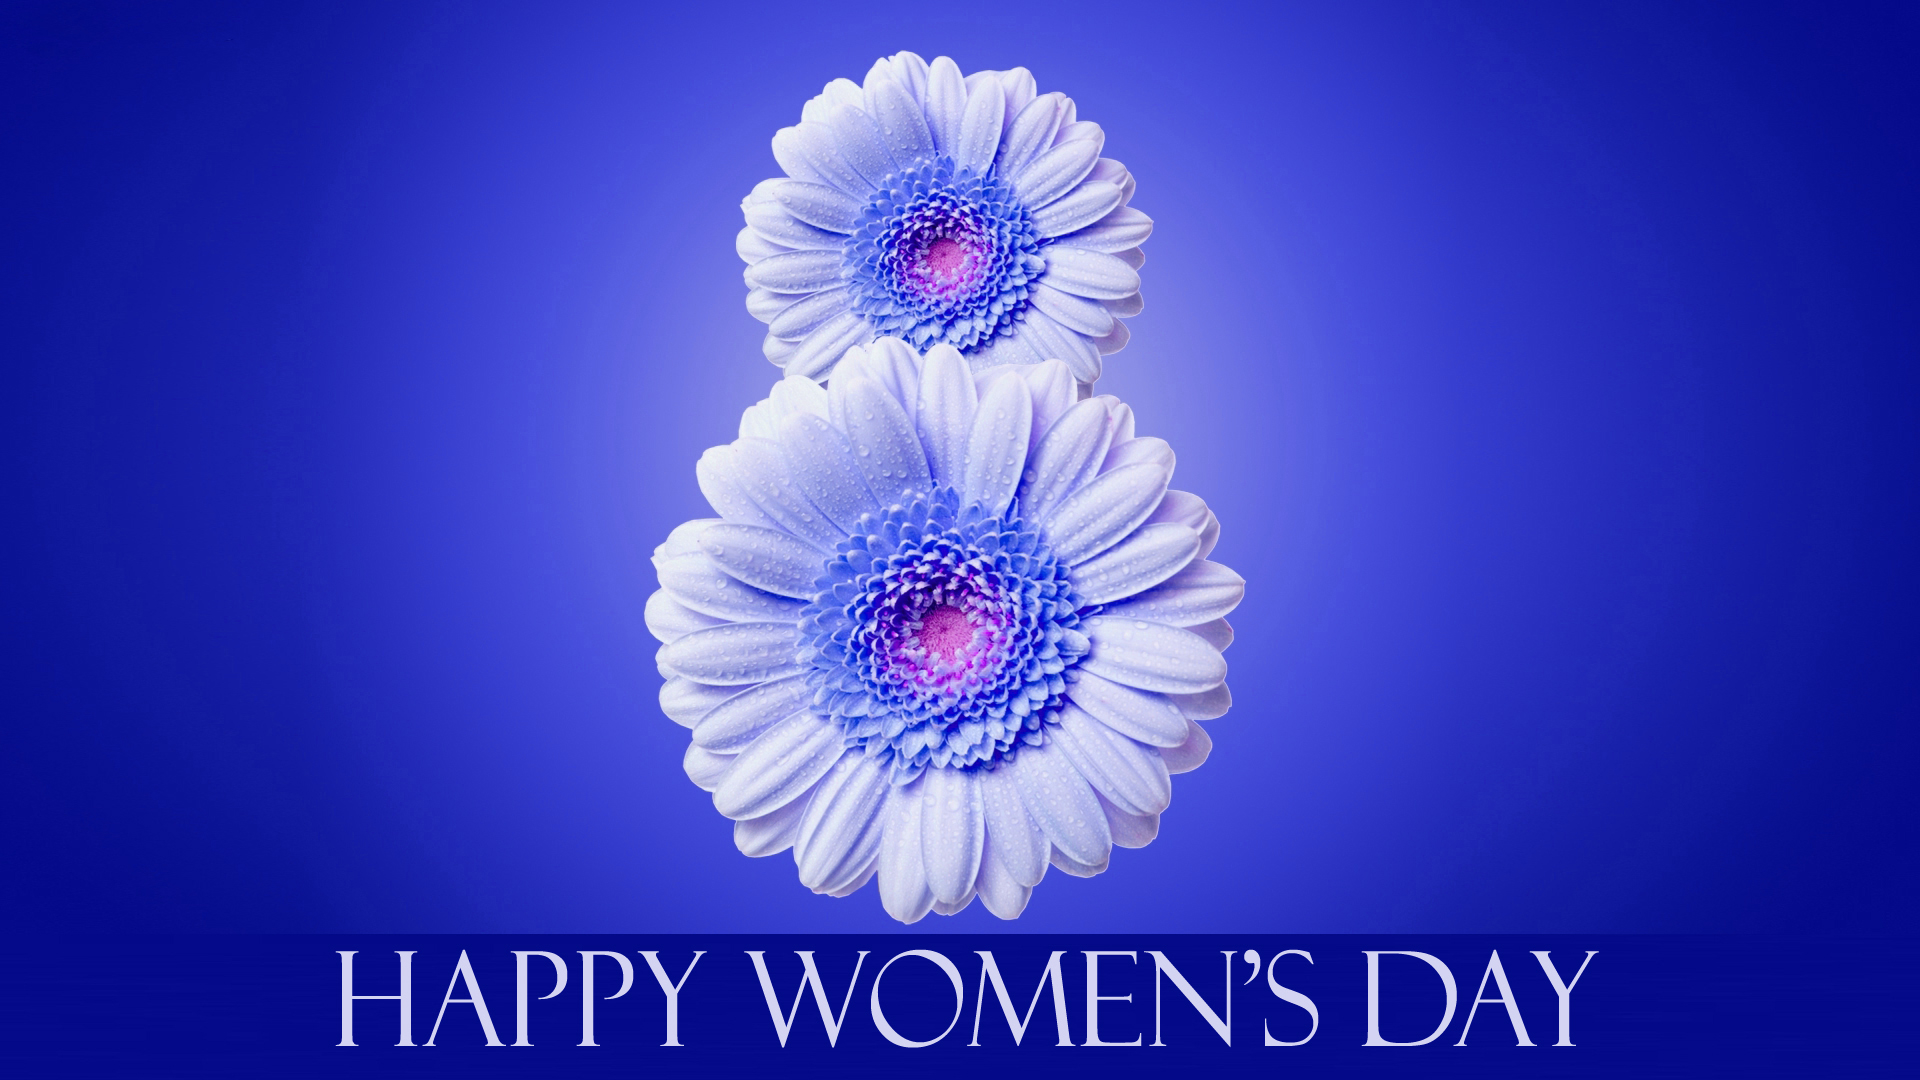 Woman's Day Happy Women's Day - 1920x1080 Wallpaper 